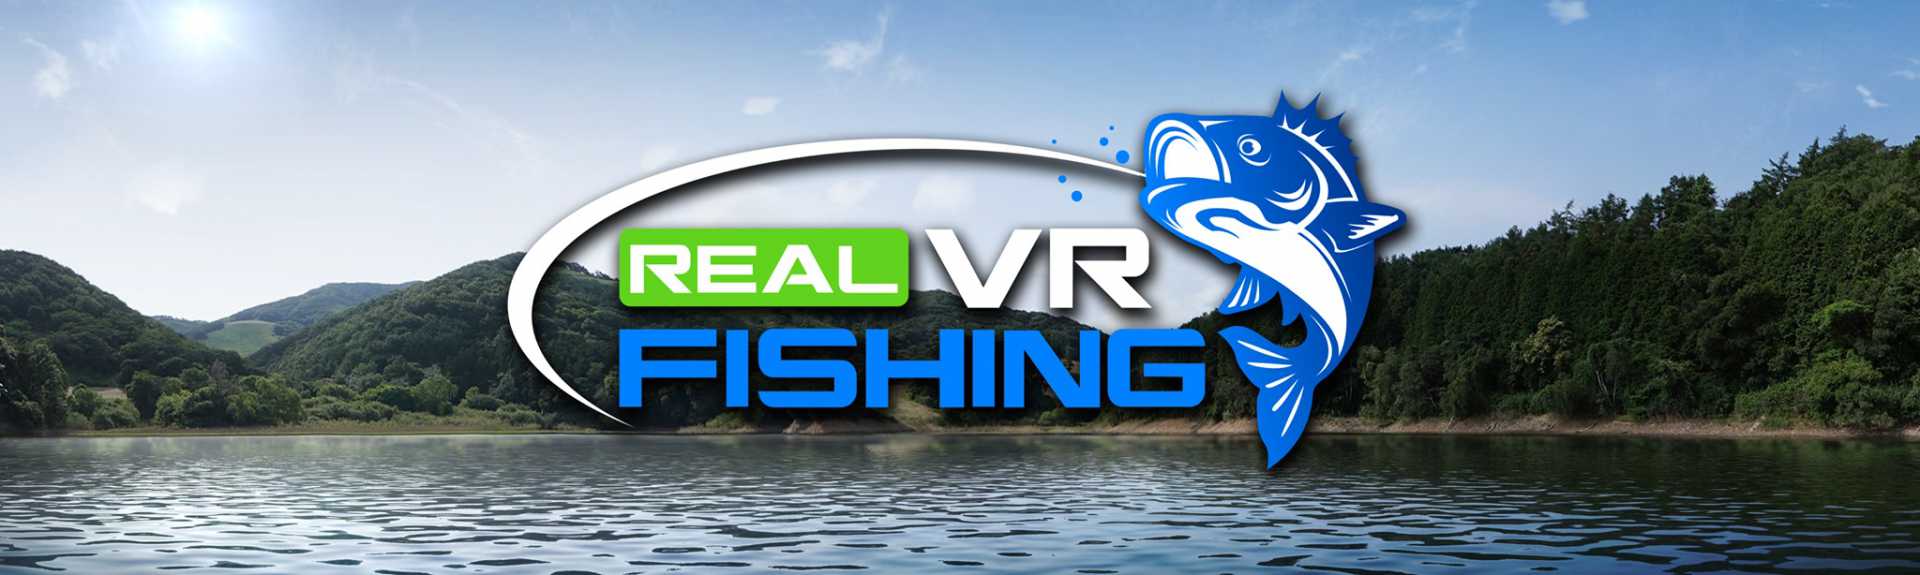 Real VR Fishing